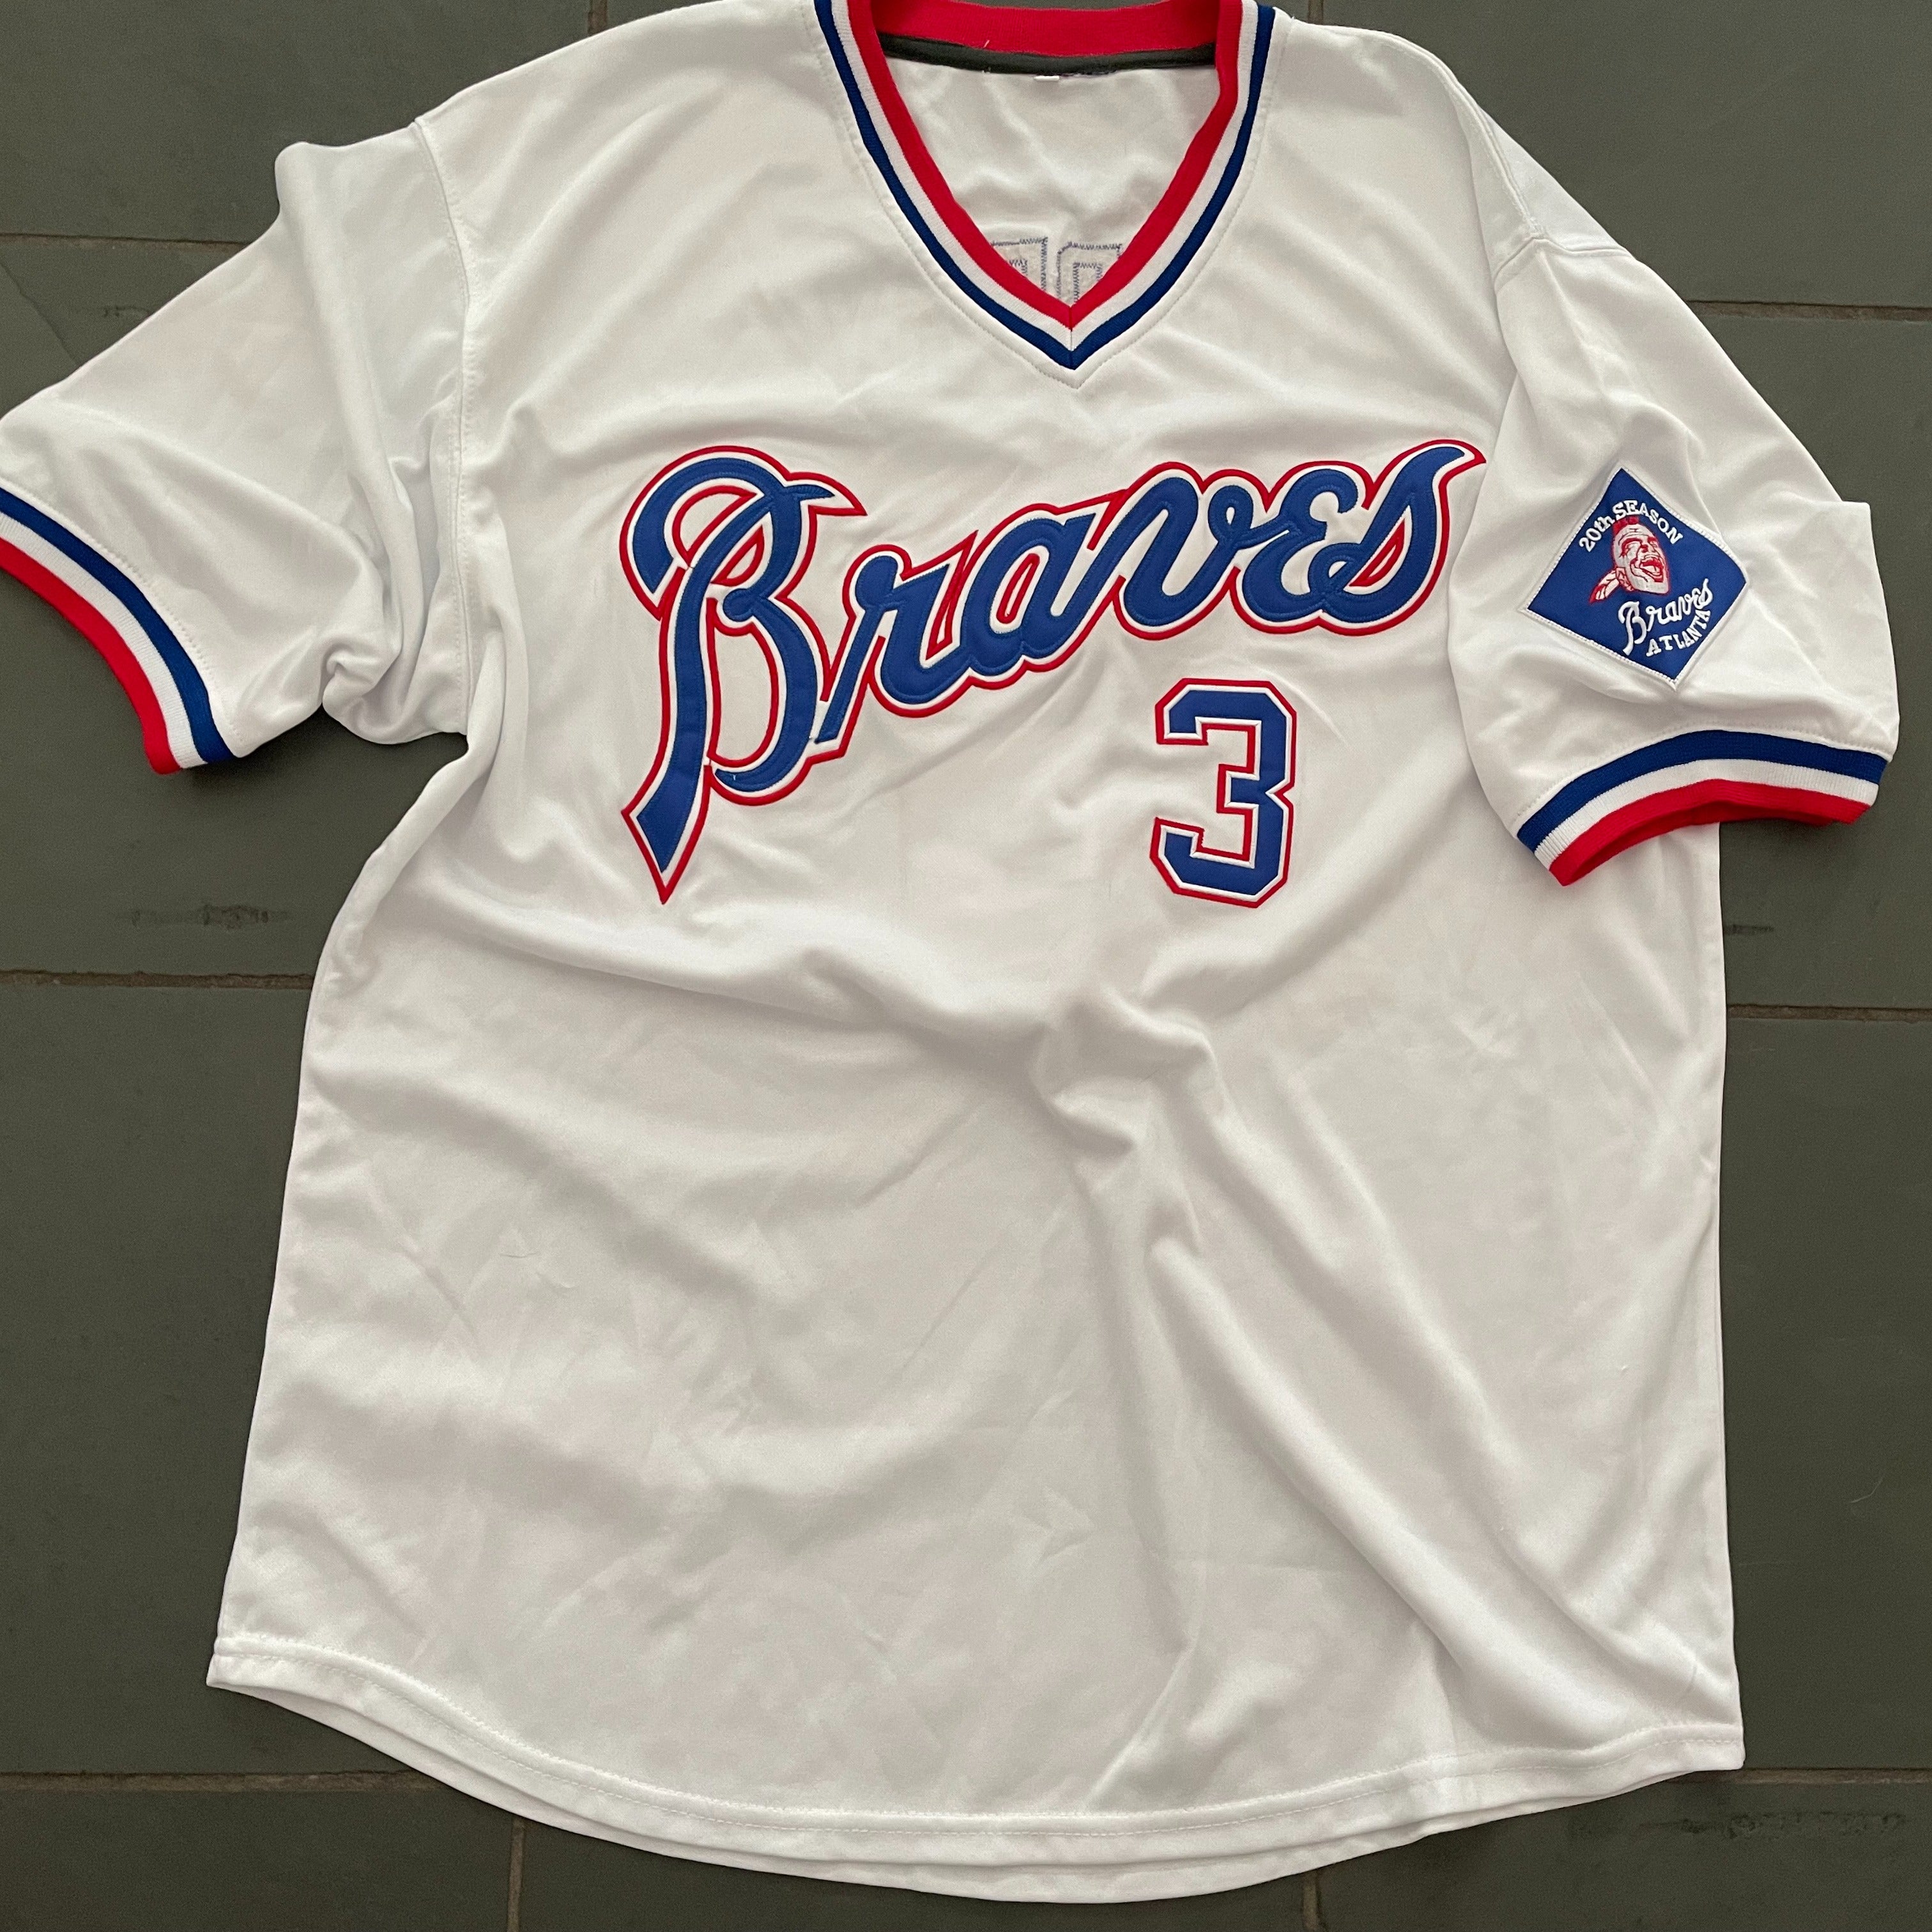 Tyler Matzek Men's Atlanta Braves Home Jersey - White Authentic